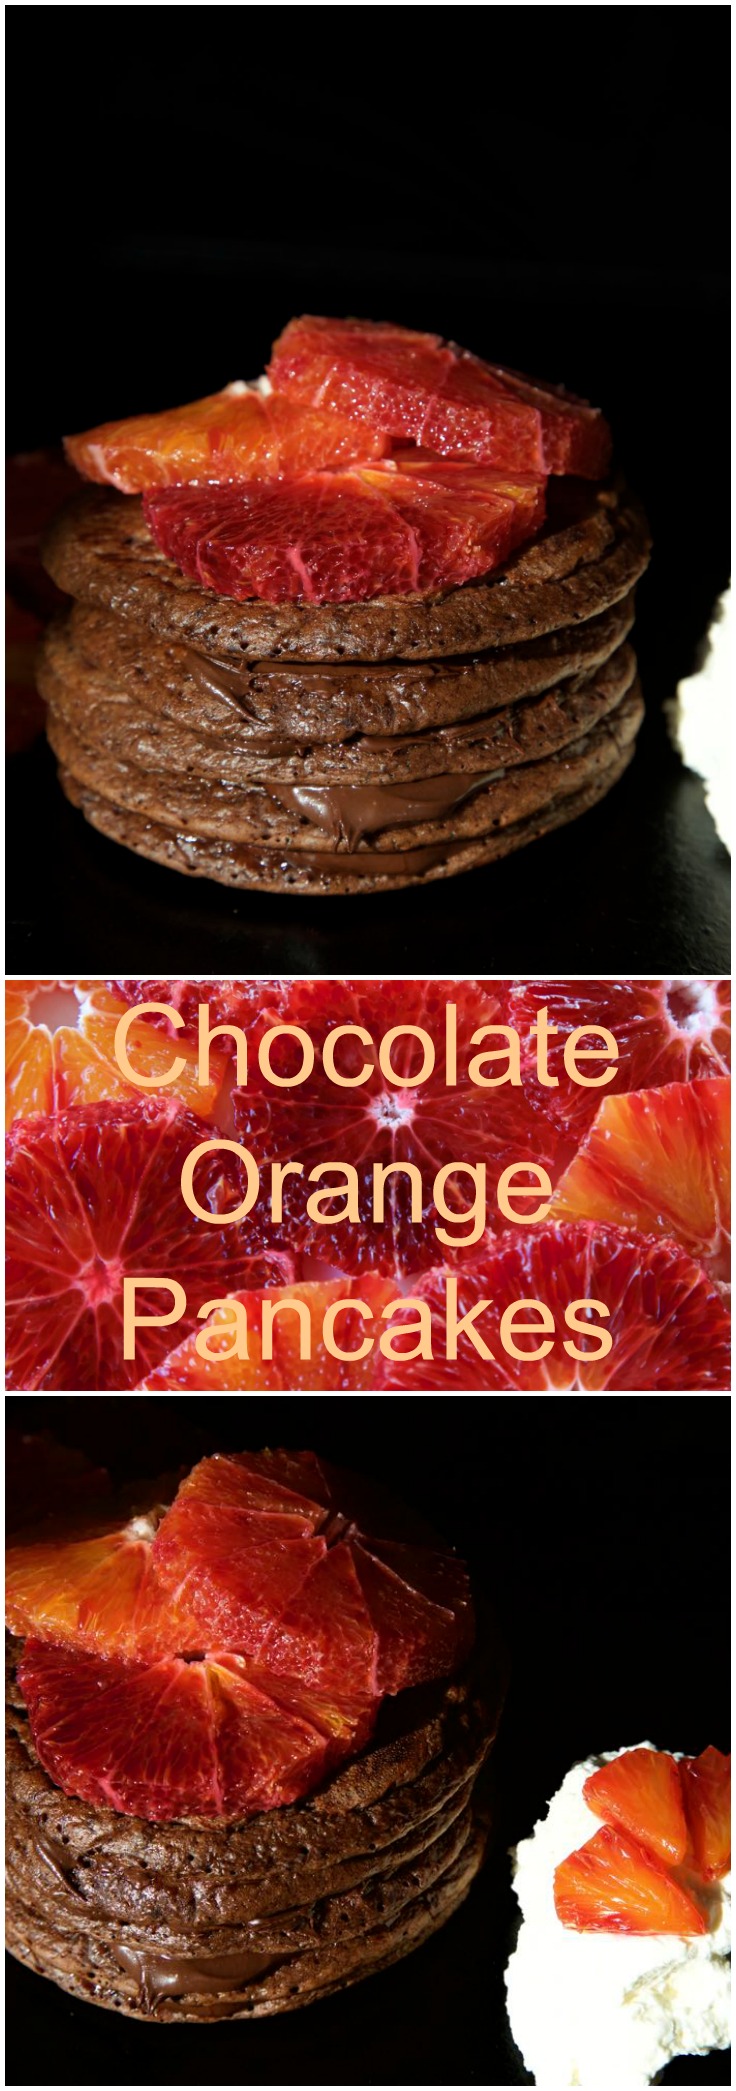 Double Chocolate Orange Pancakes with Blood Oranges and Orange Blossom Cream